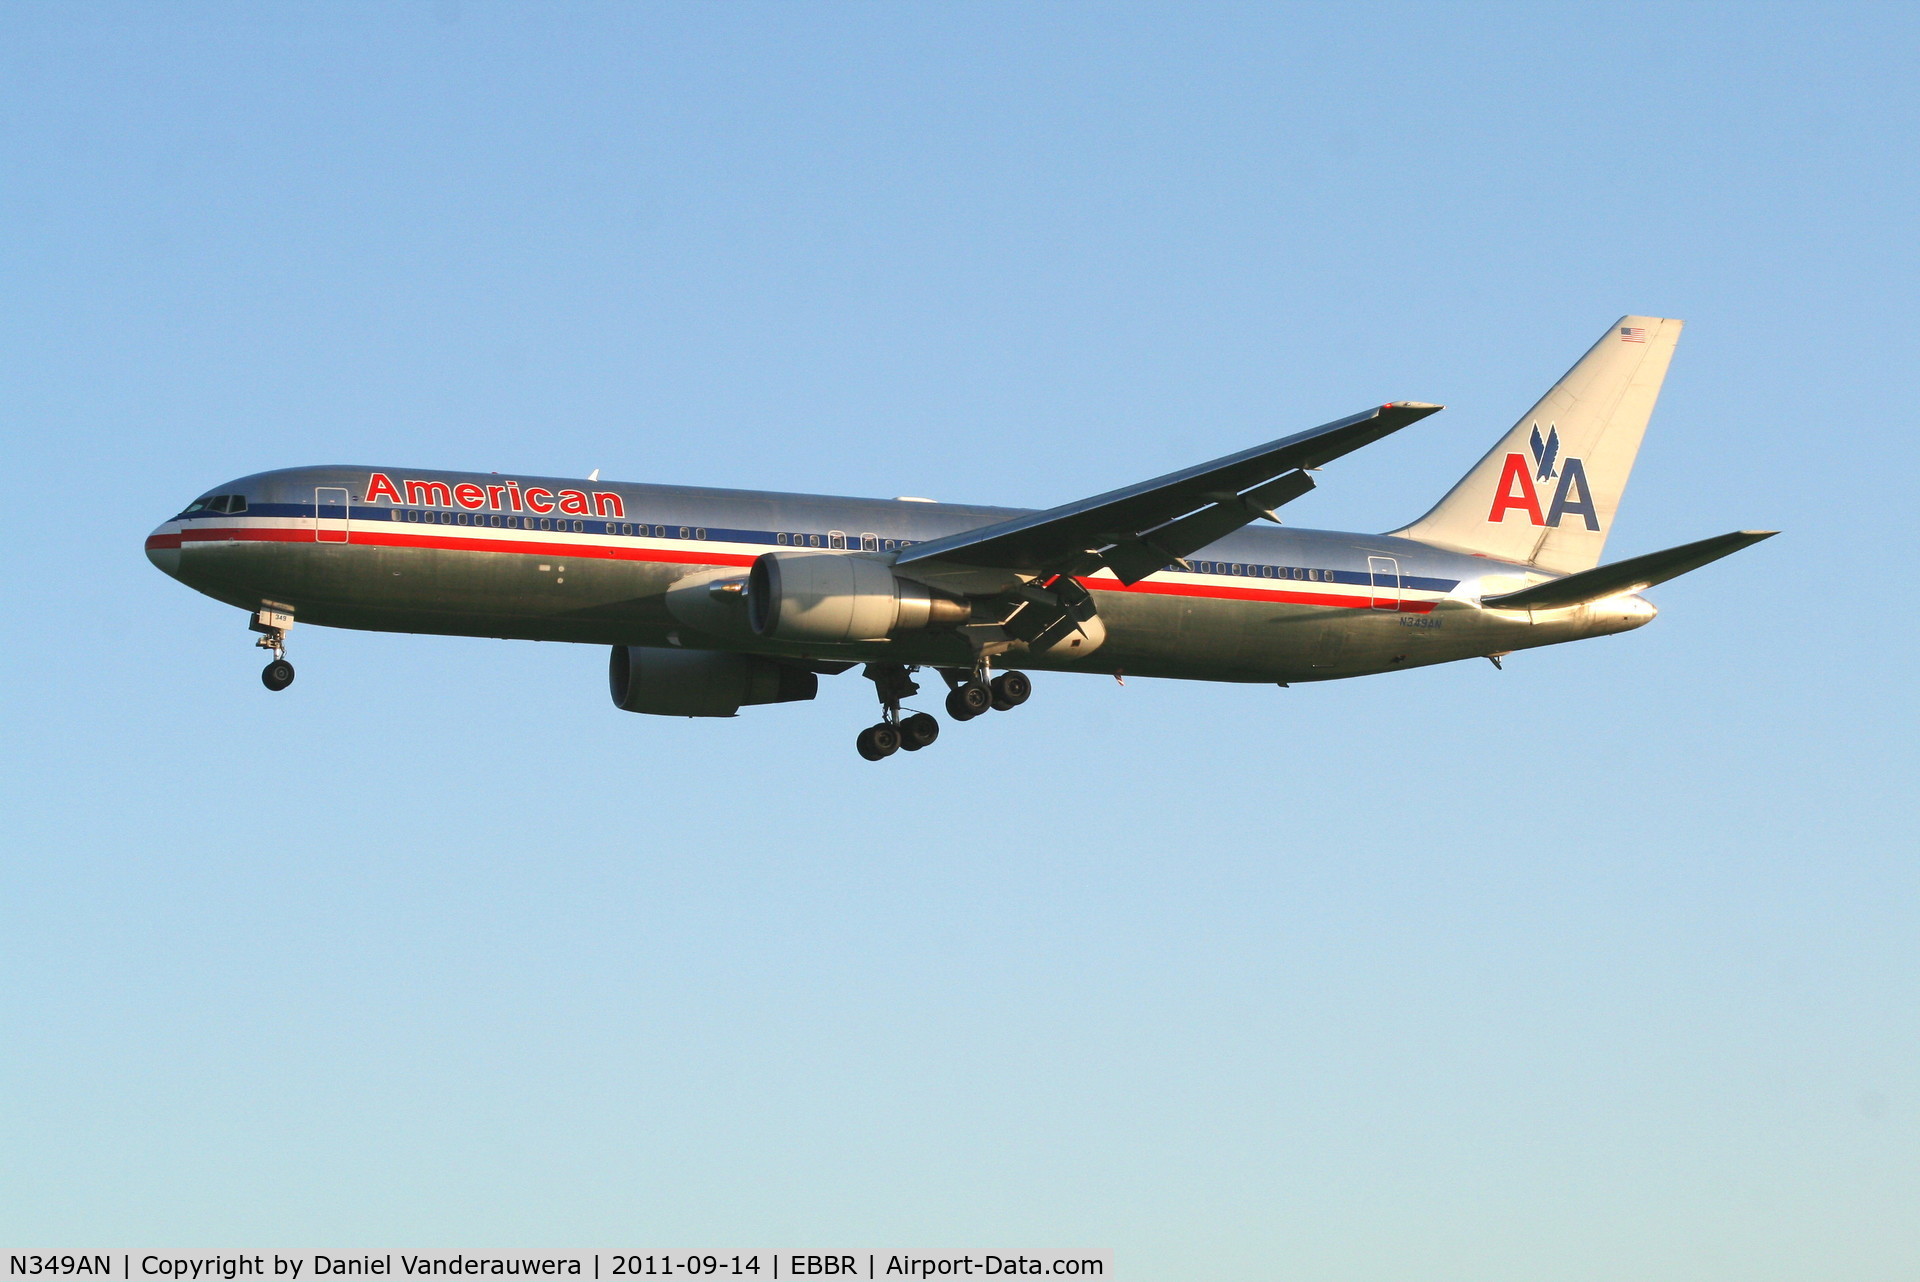 N349AN, 2003 Boeing 767-323 C/N 33088, Arrival of flight AA088 to RWY 25L